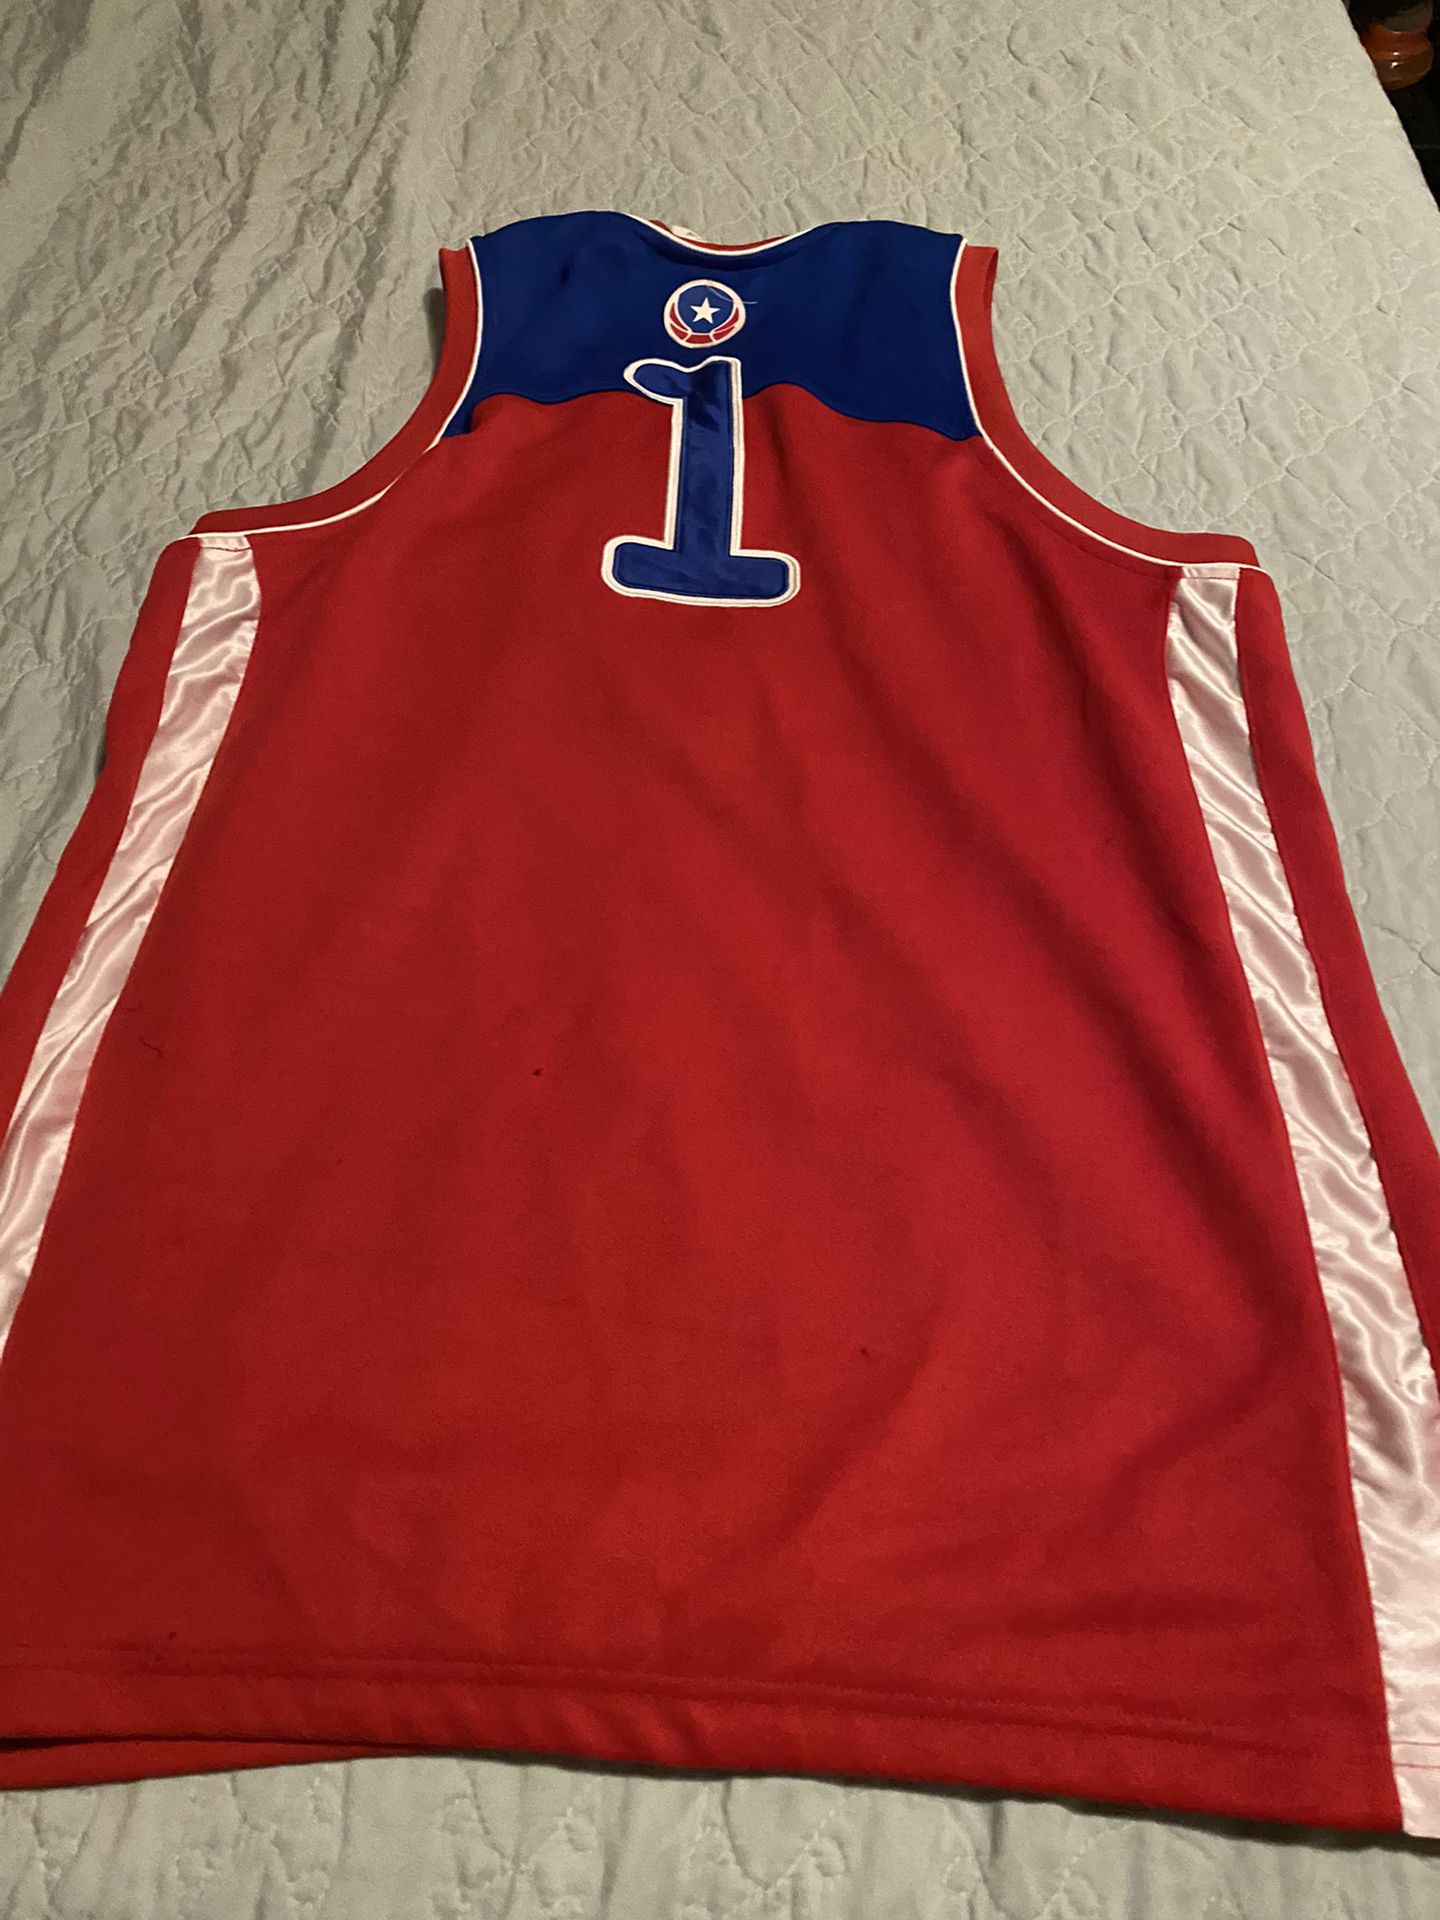 Puerto Rican Pride Basketball Jersey - PR 51 XX-Large